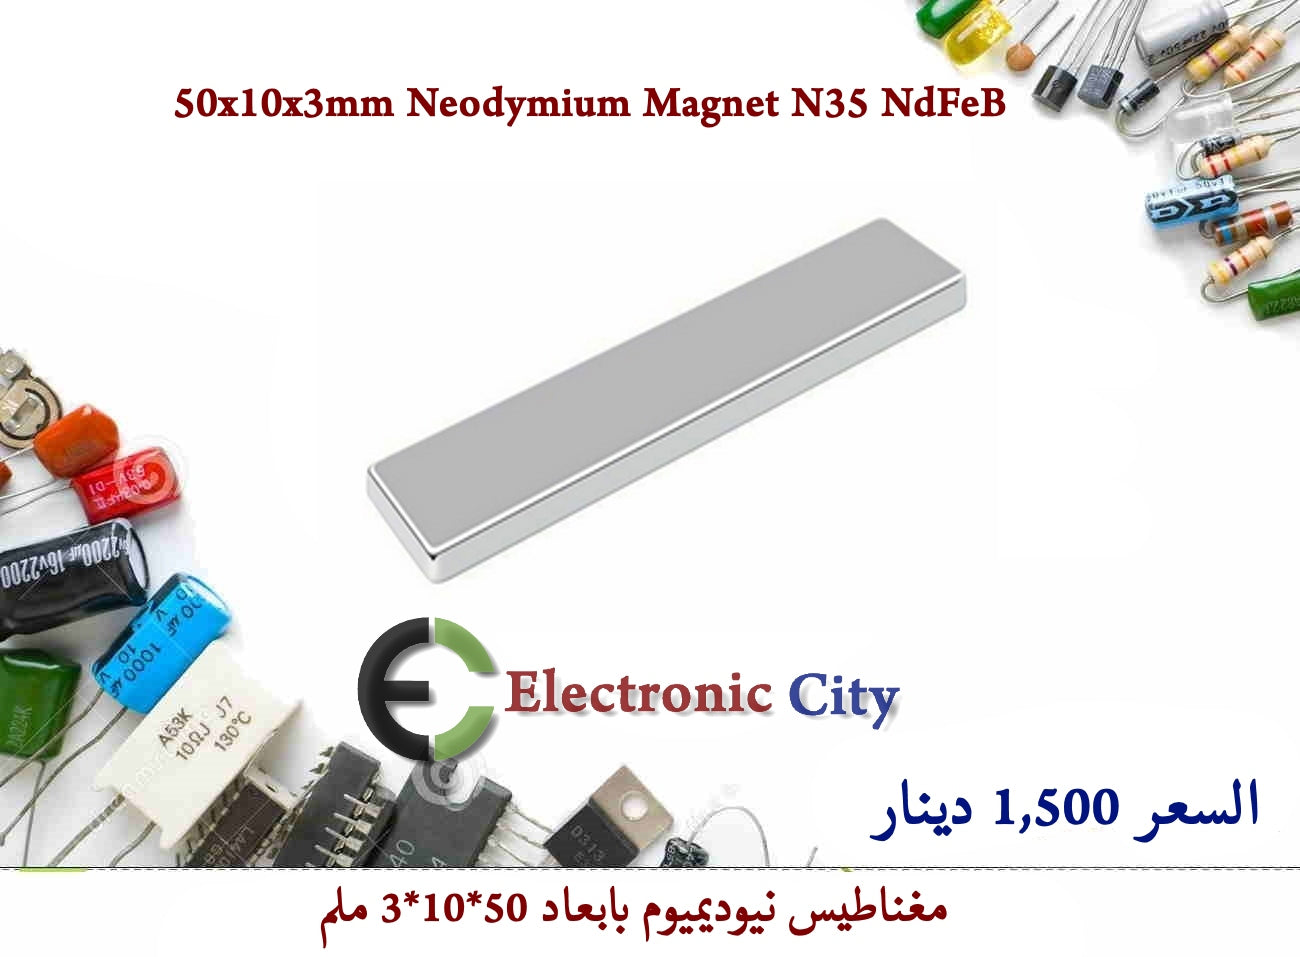 50x10x3mm Neodymium Magnet N35 NdFeB